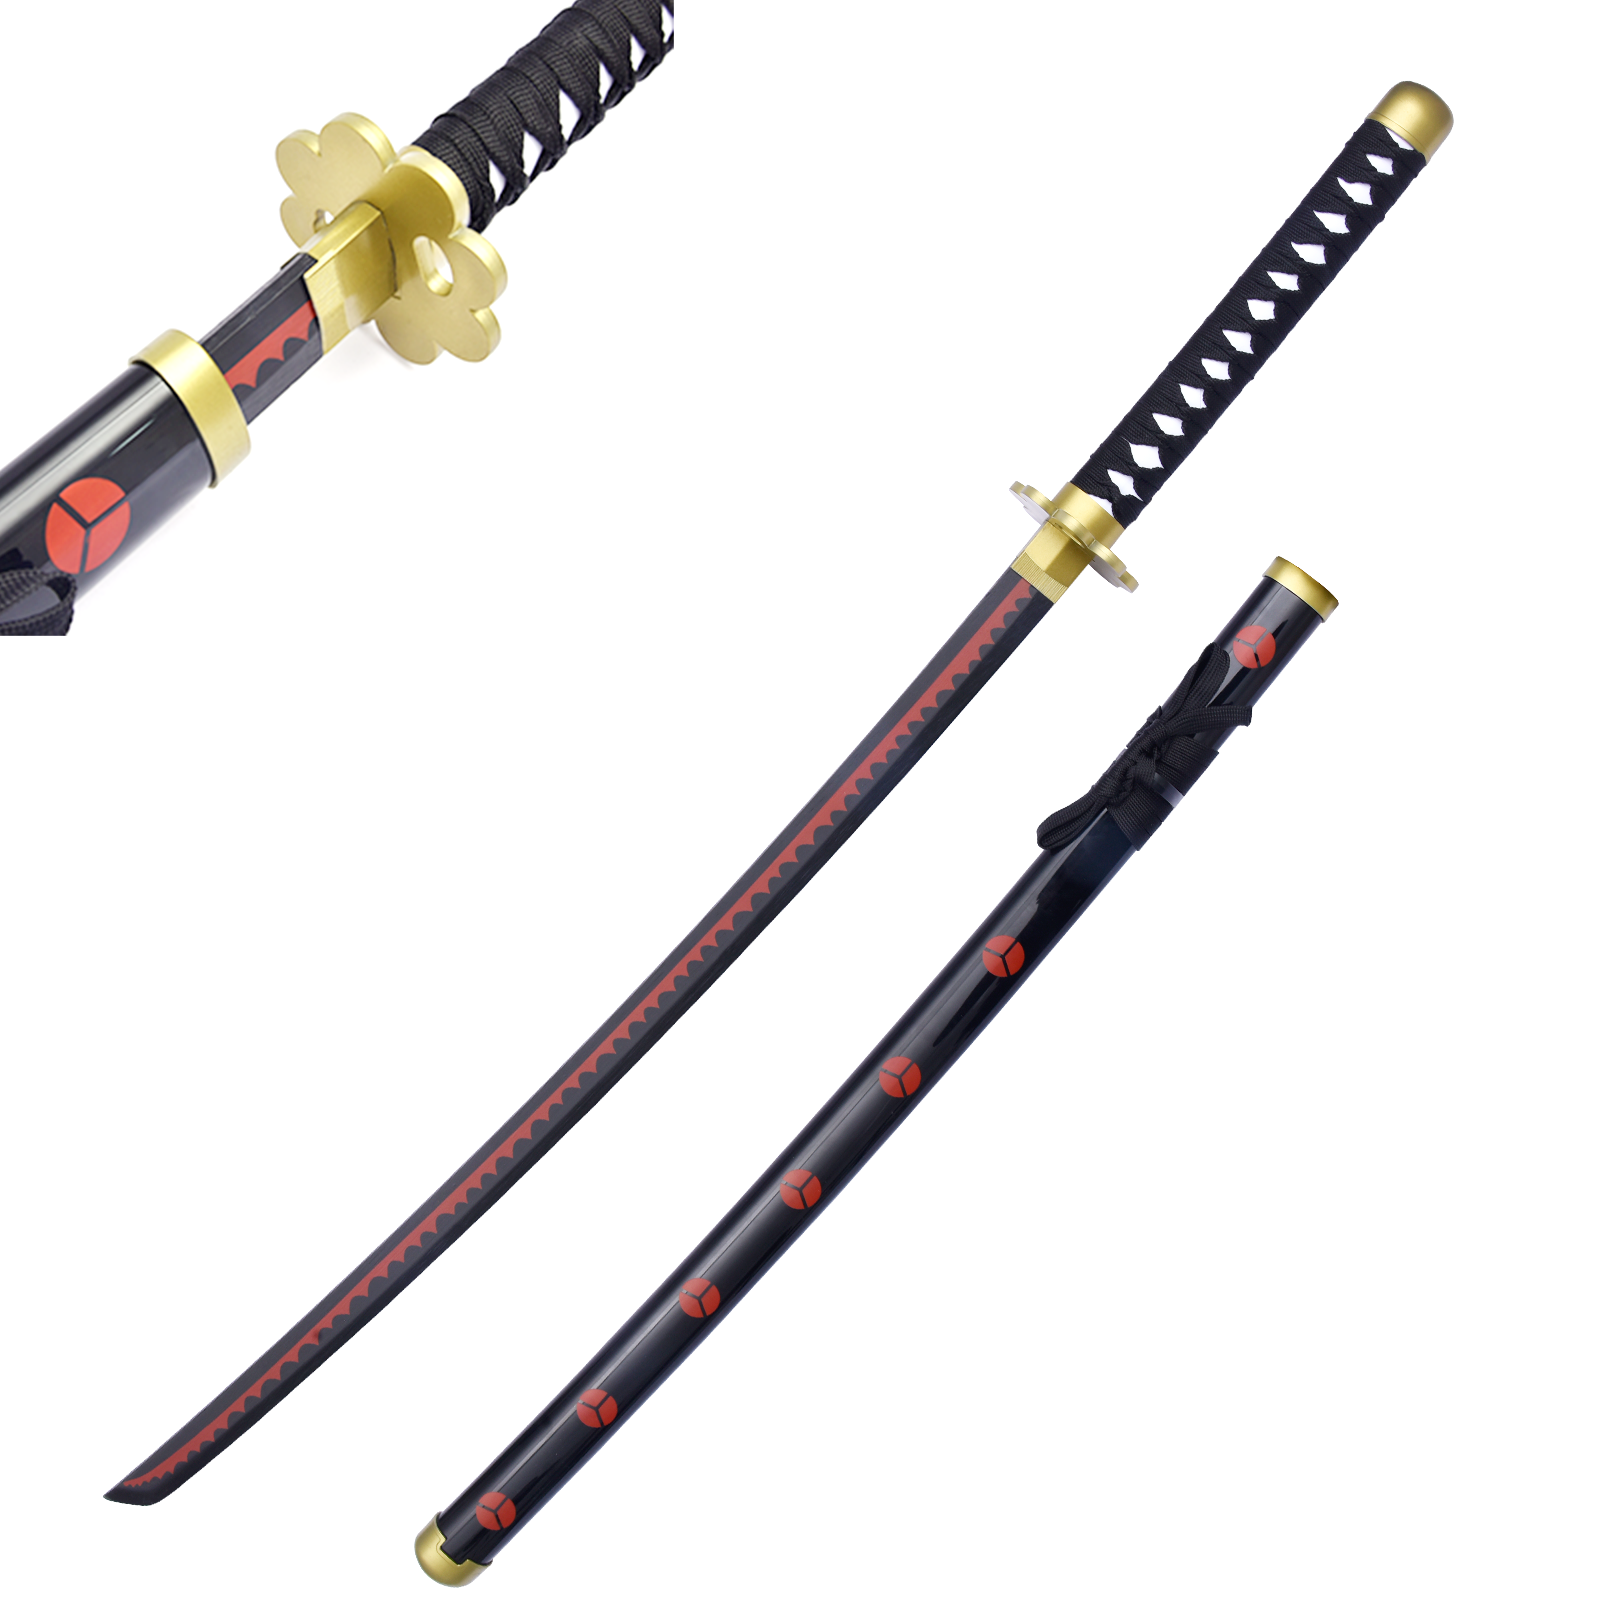 zoro-sword with cash back rebate